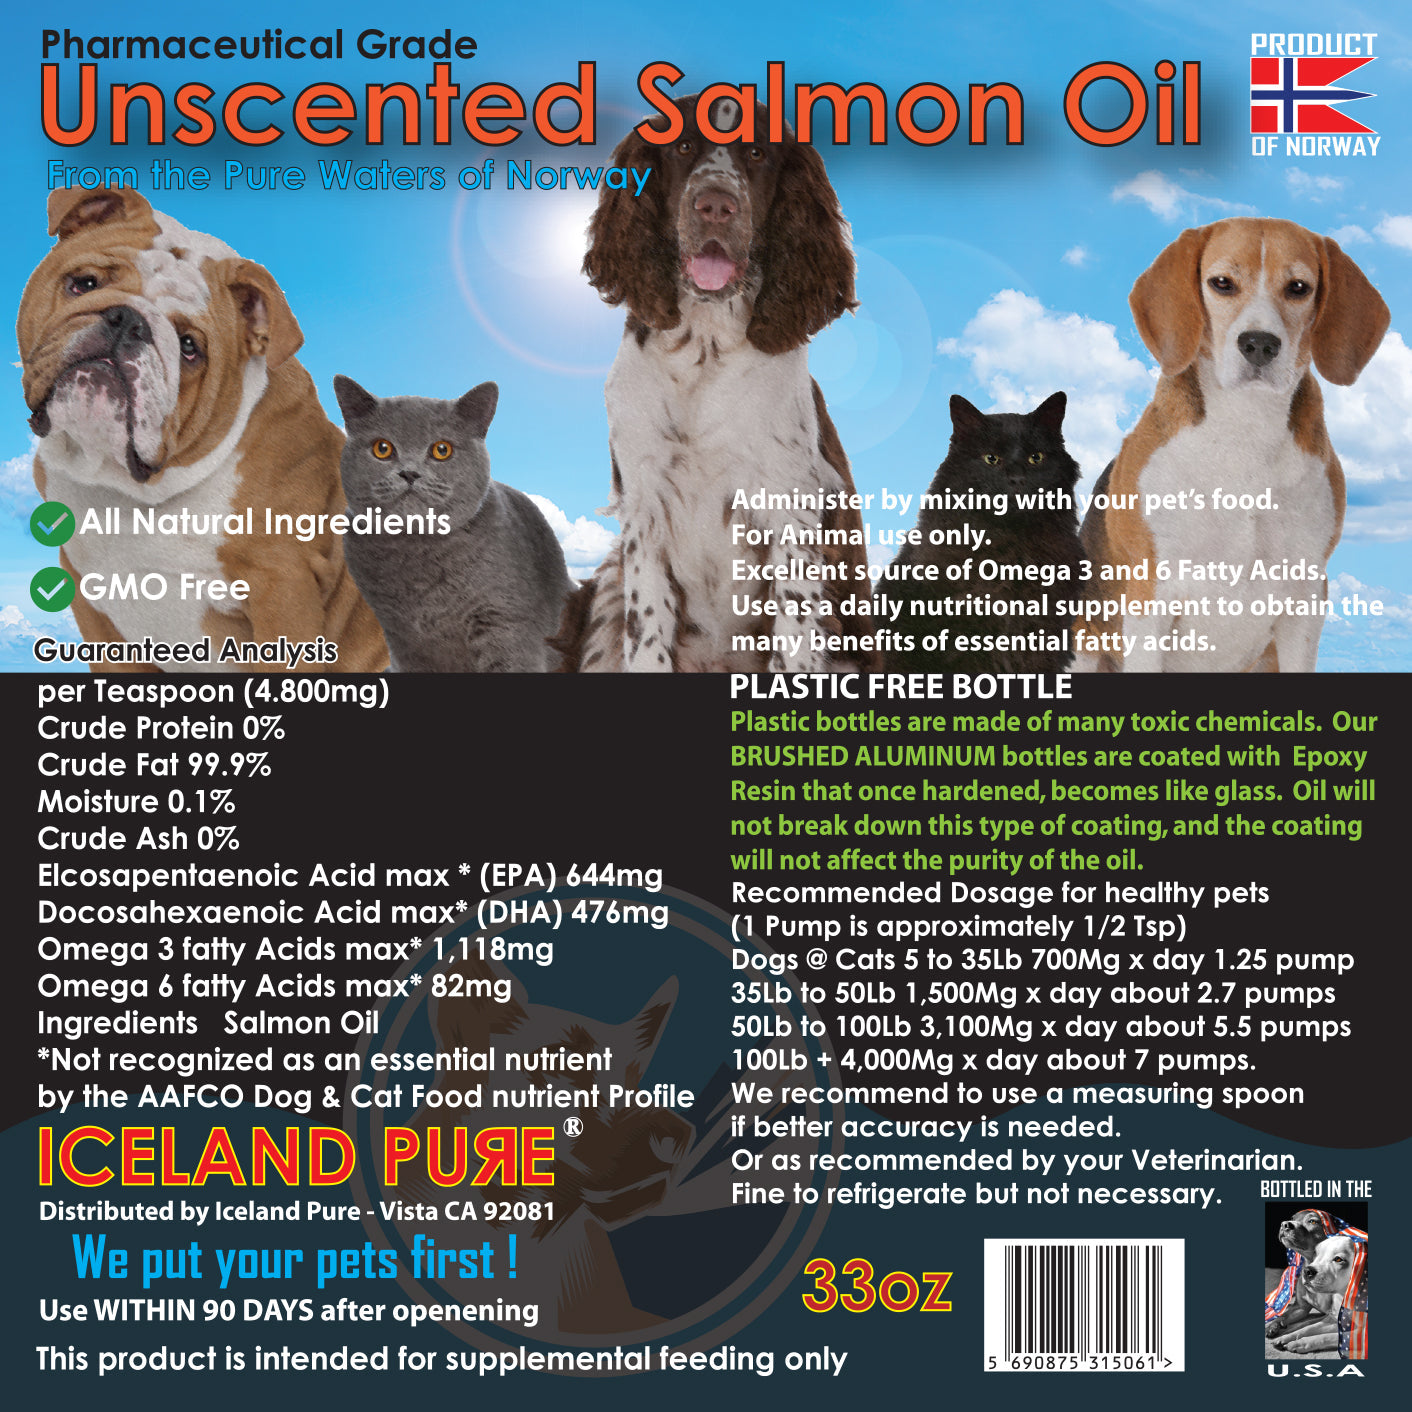 Salmon Oil (Pharmaceutical Grade & Unscented) - 17oz